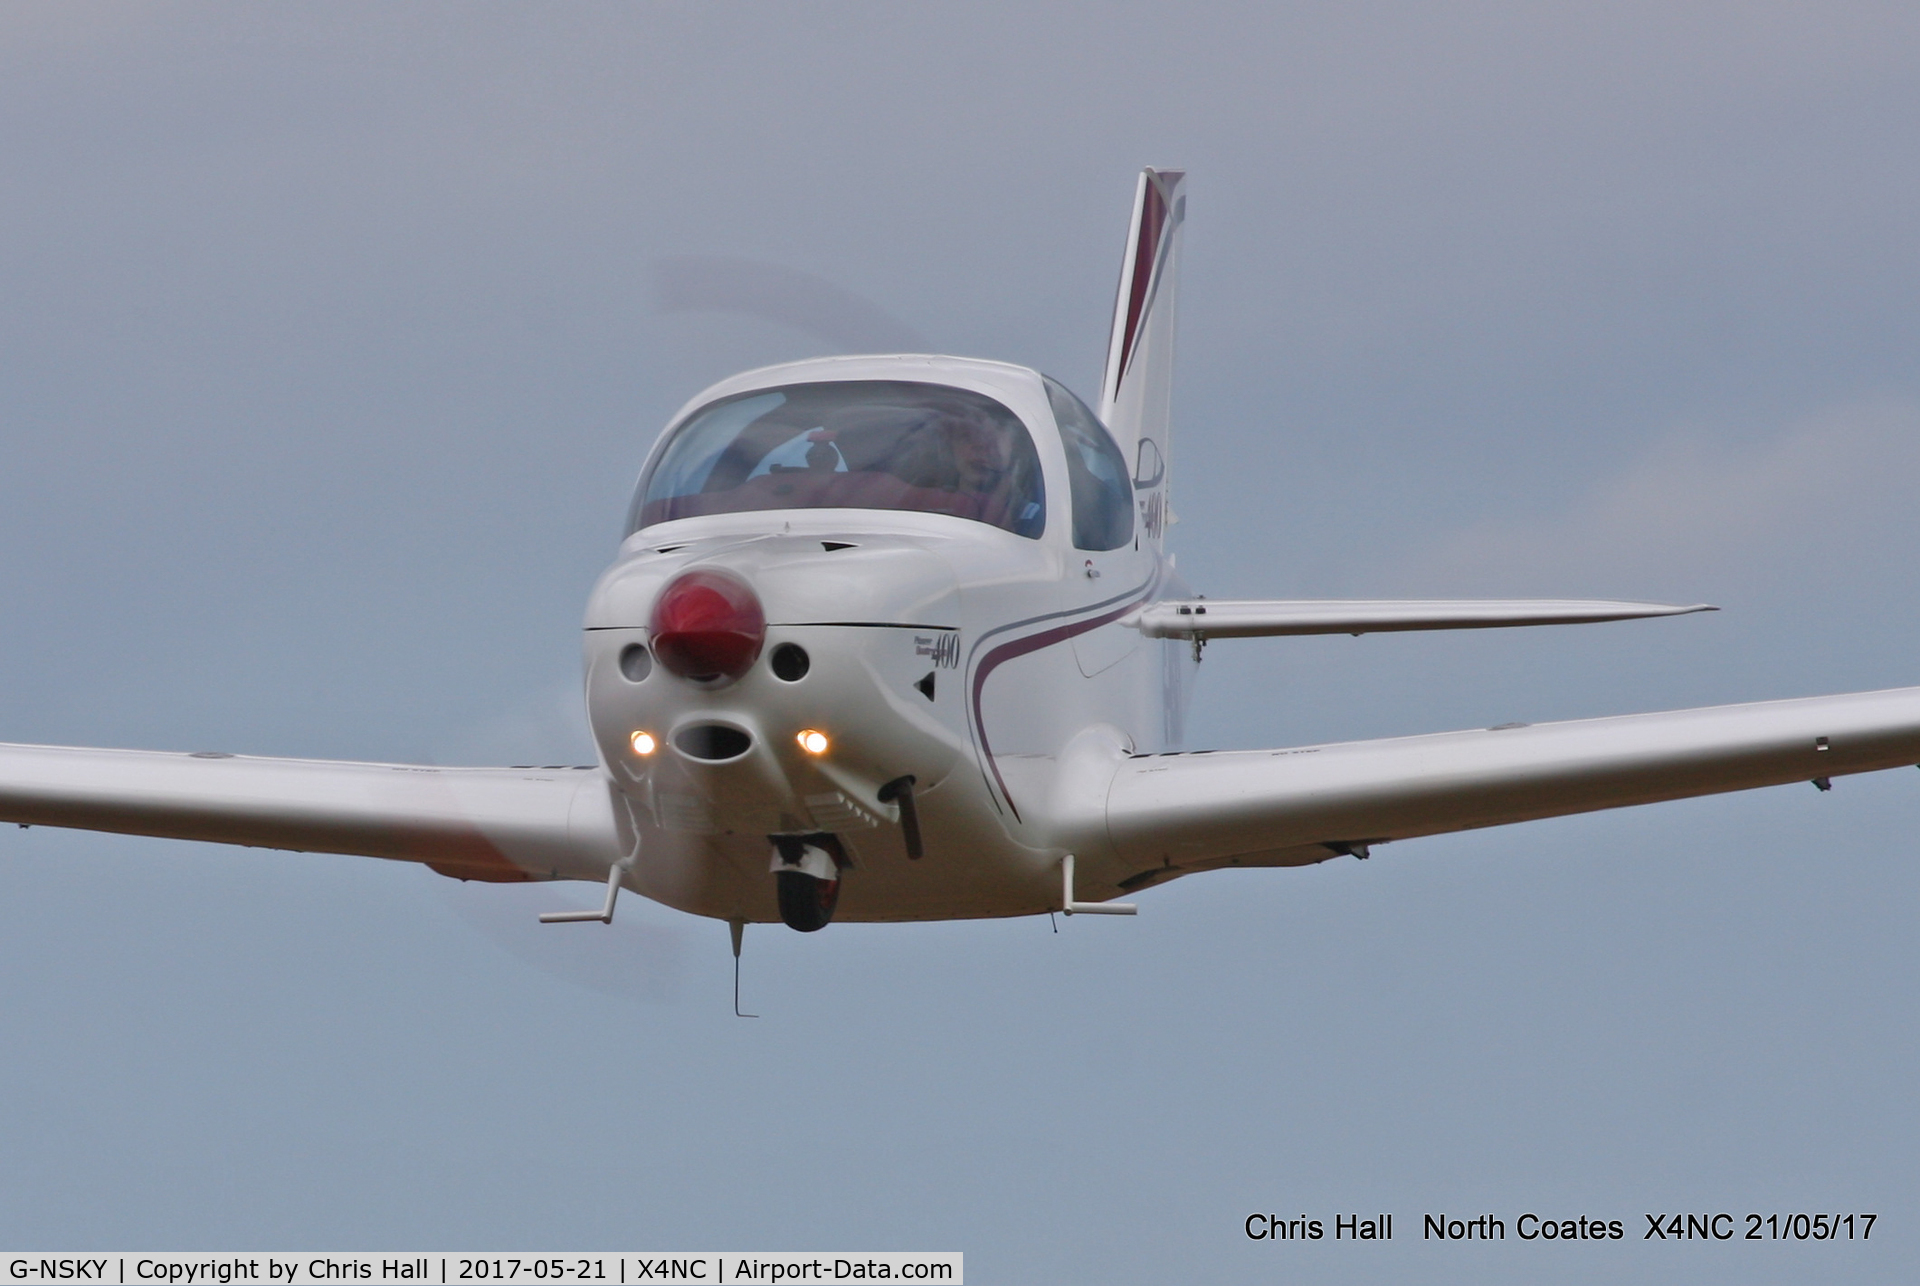 G-NSKY, 2016 Alpi Aviation Pioneer 400 C/N LAA 364-15236, North Coates Summer fly in